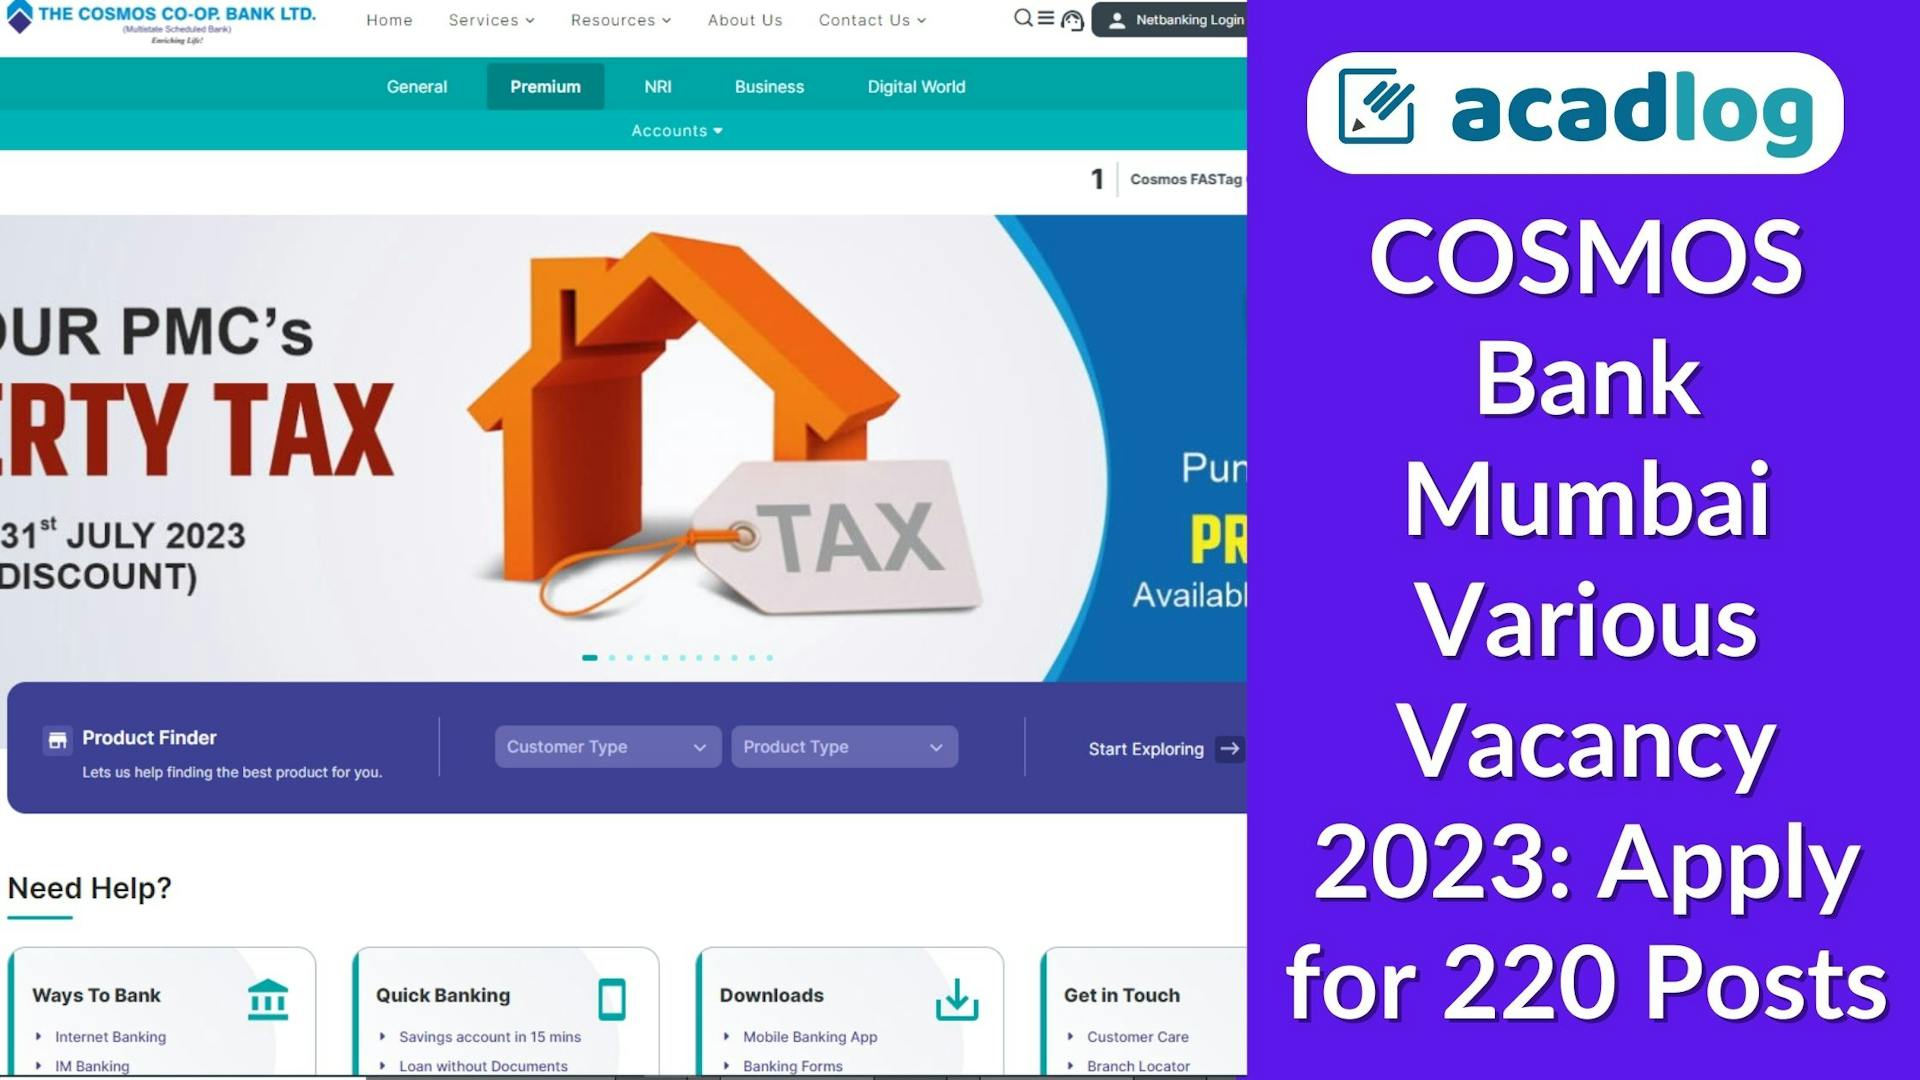 COSMOS Bank Mumbai Various Vacancy 2023: Apply for 220 Posts